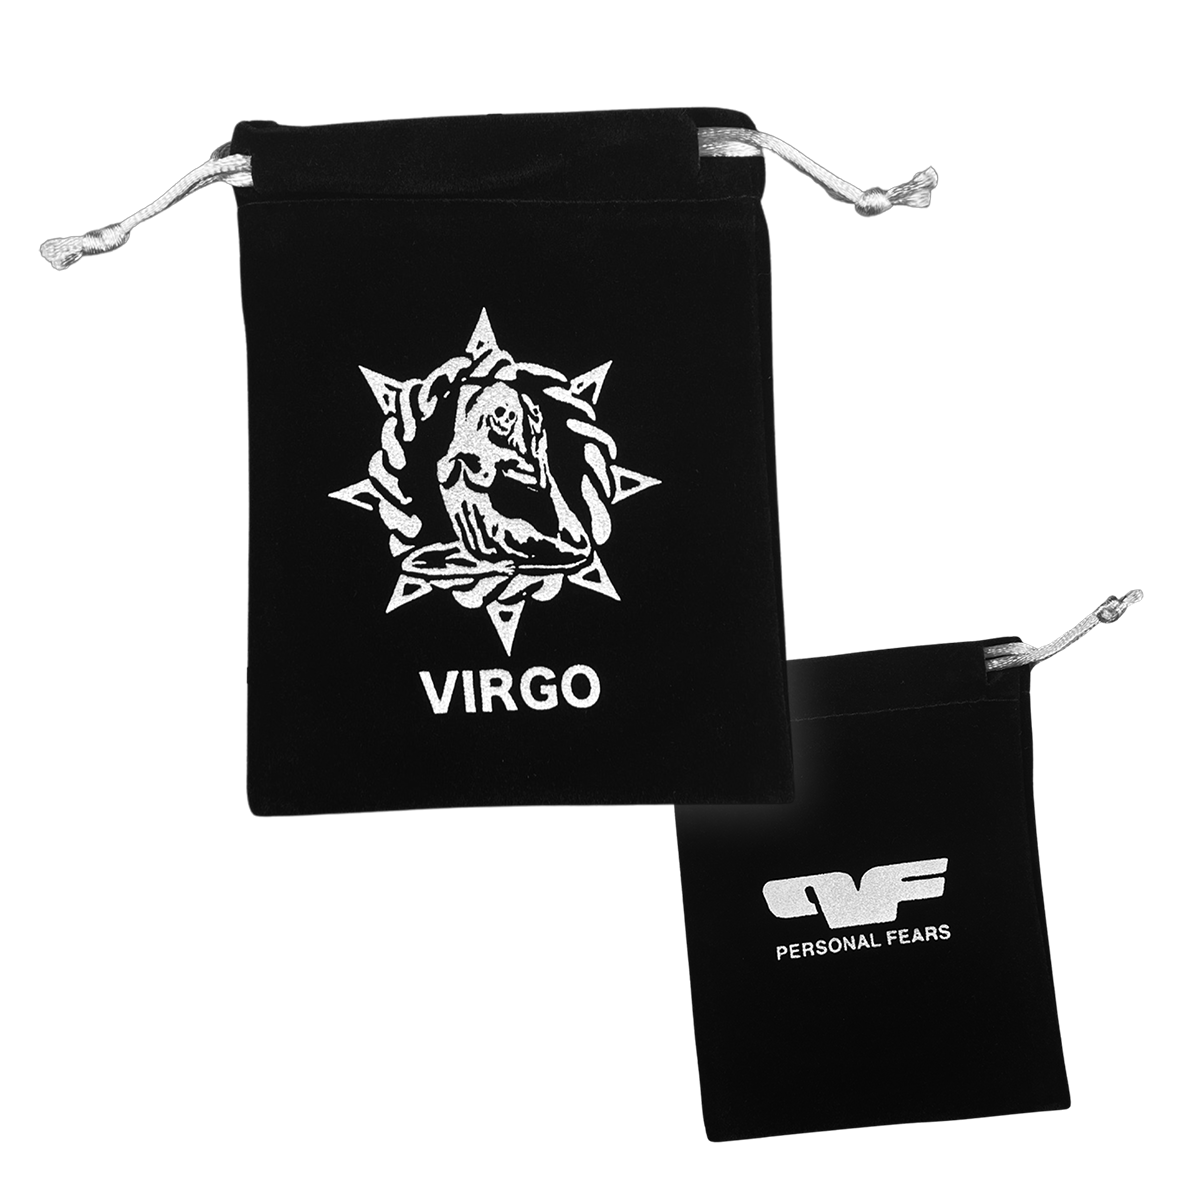 Virgo Necklace Pendant - Bag - Personal Fears